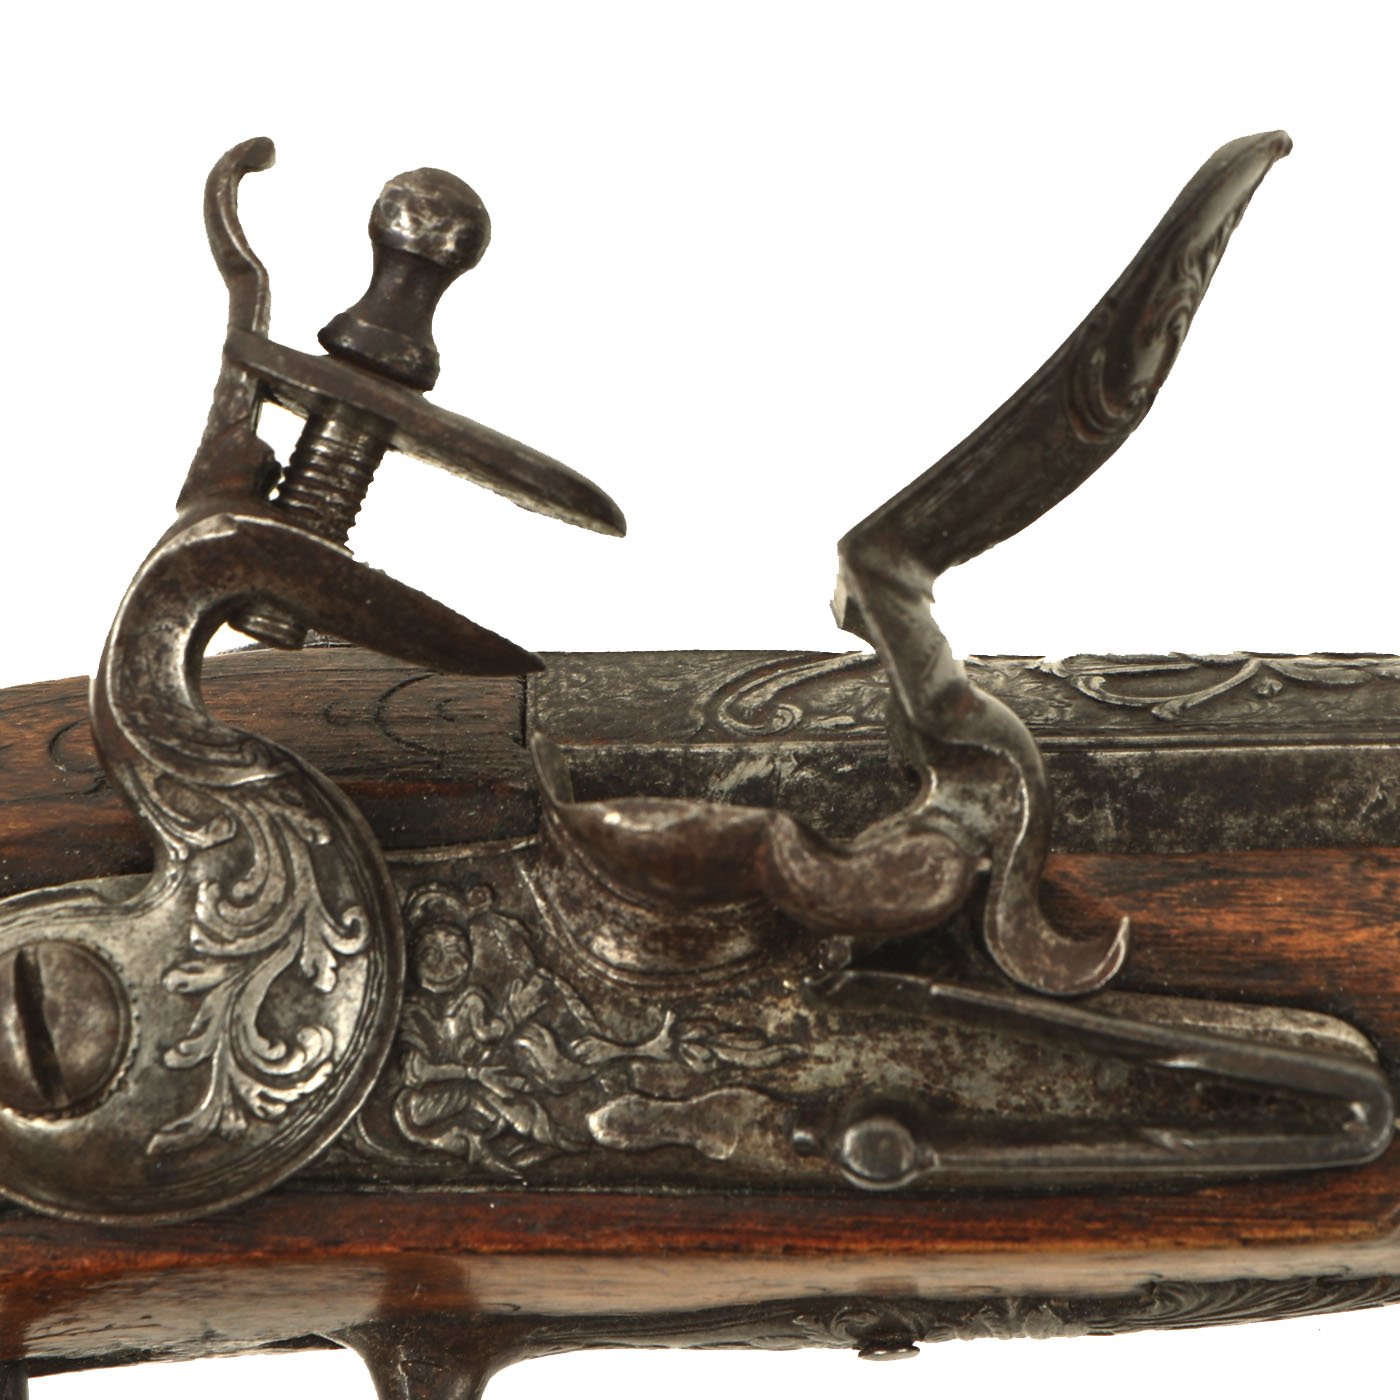 Flintlock Gun, Sri Lankan